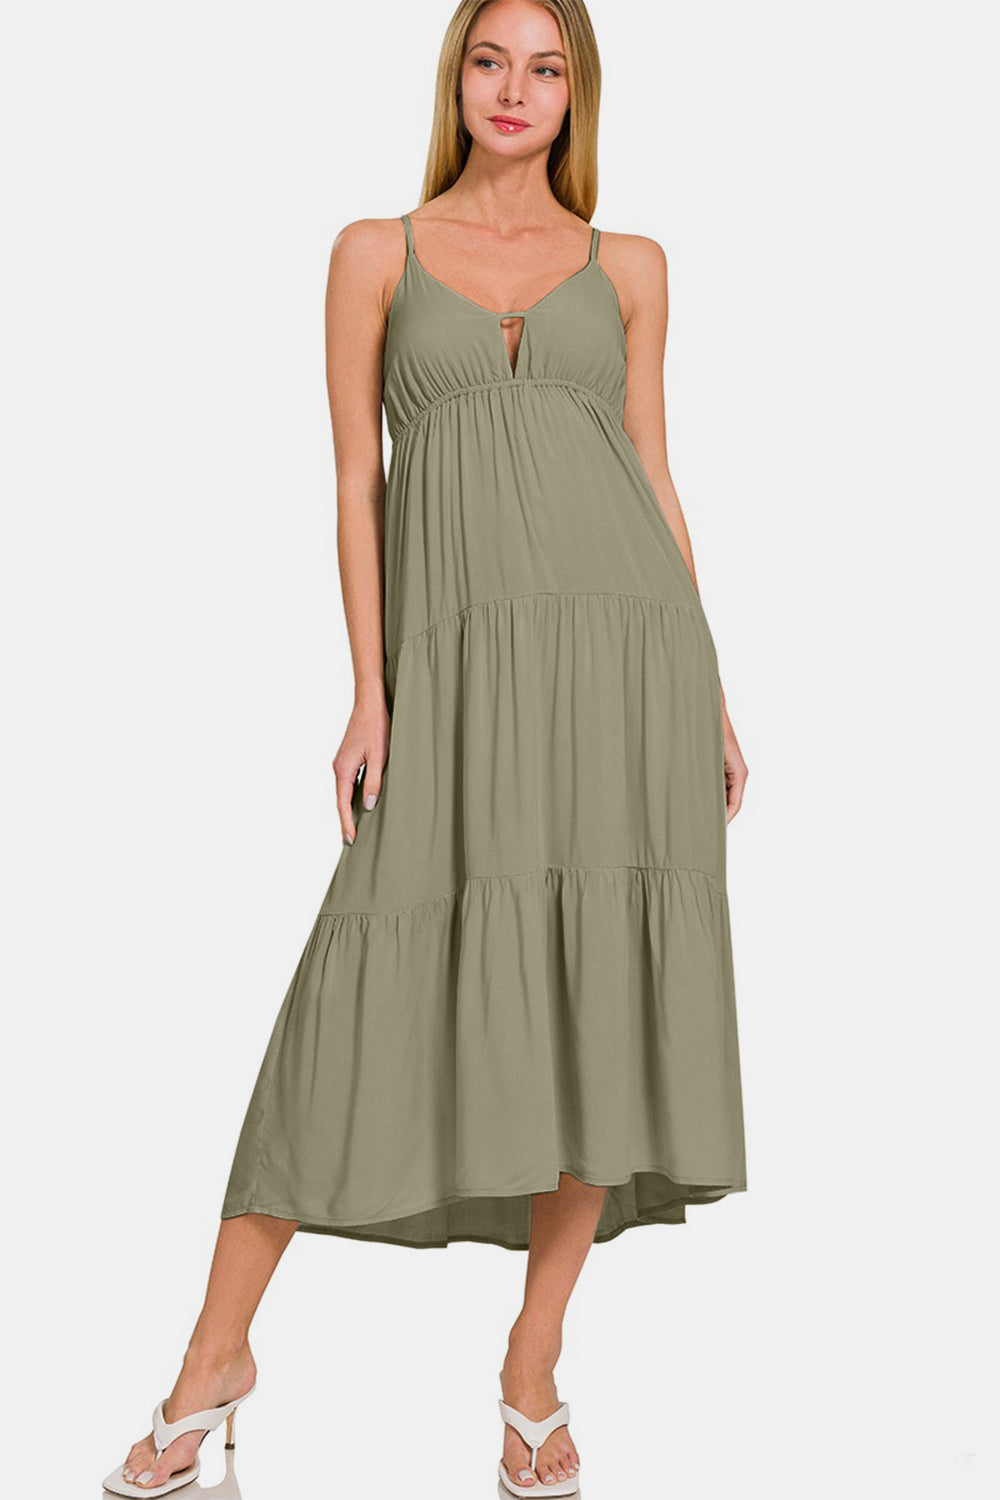 Olive Woven Tiered Cami Midi Dress